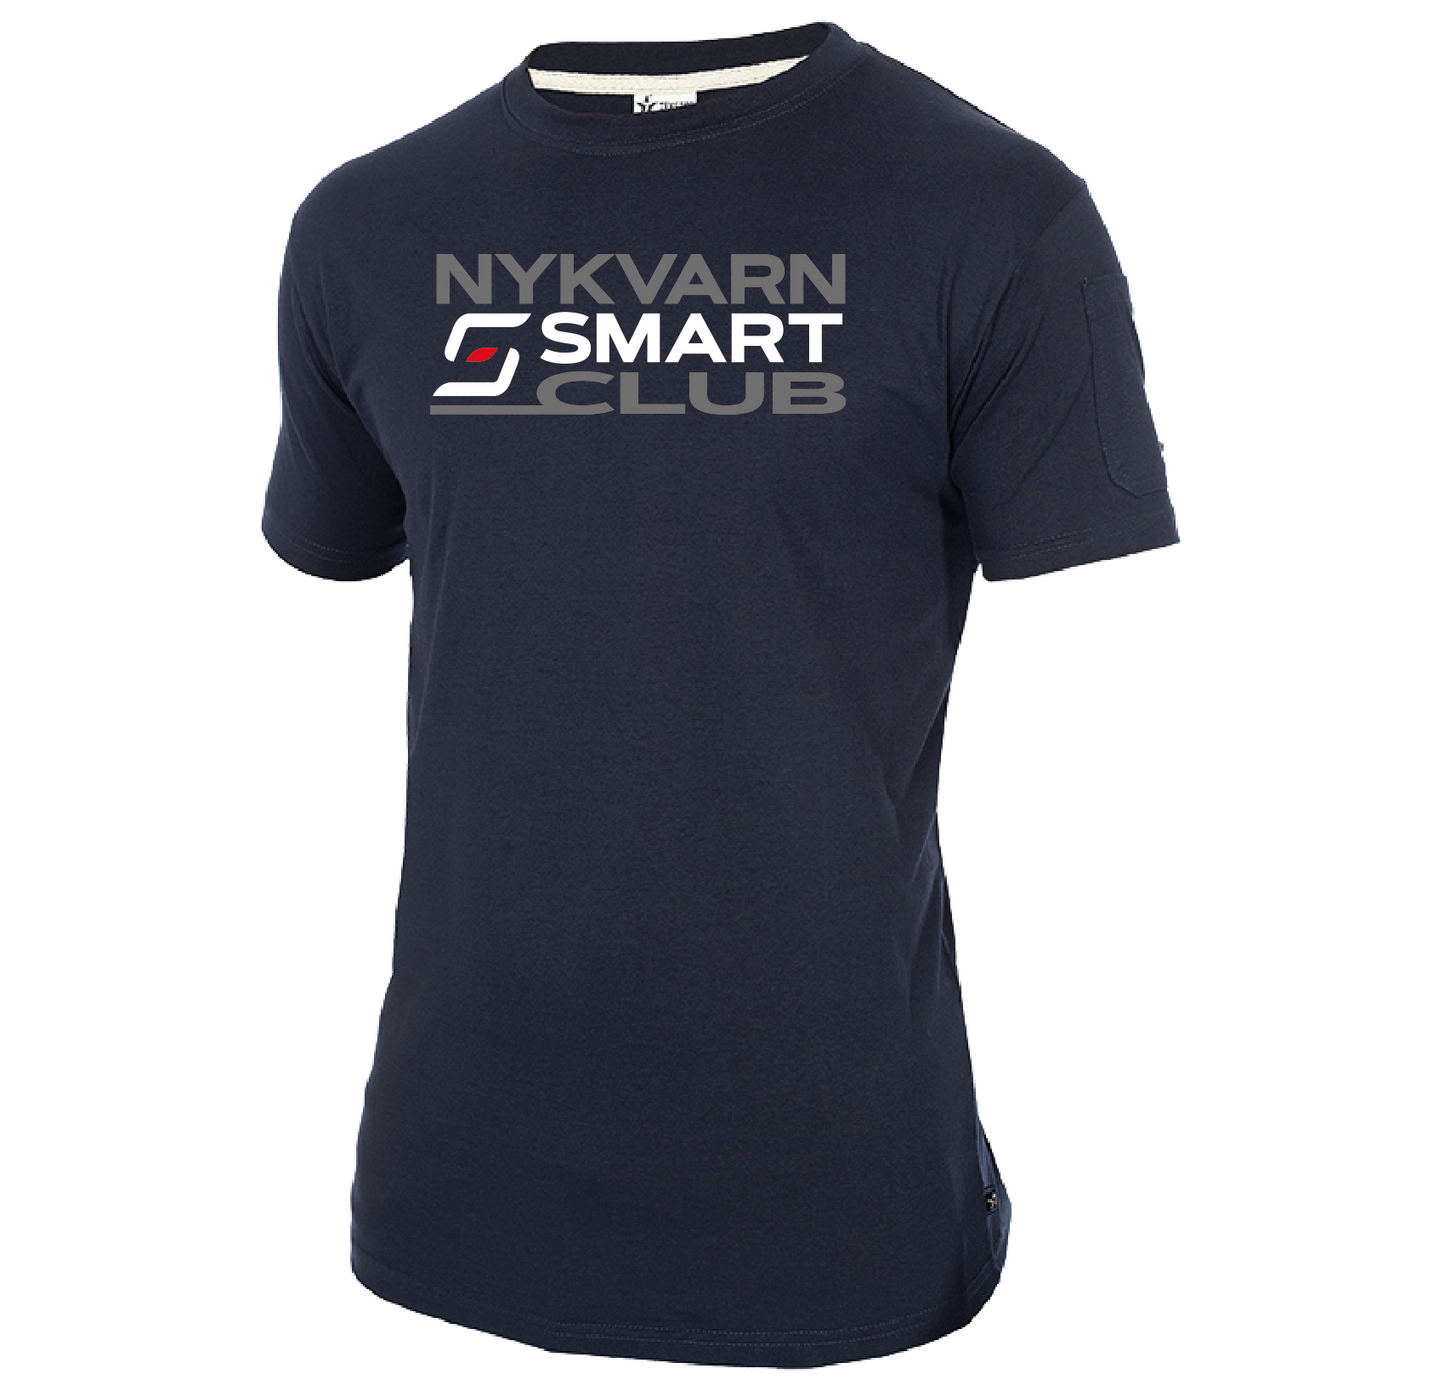 Nykvarn SMART Club T-shirt